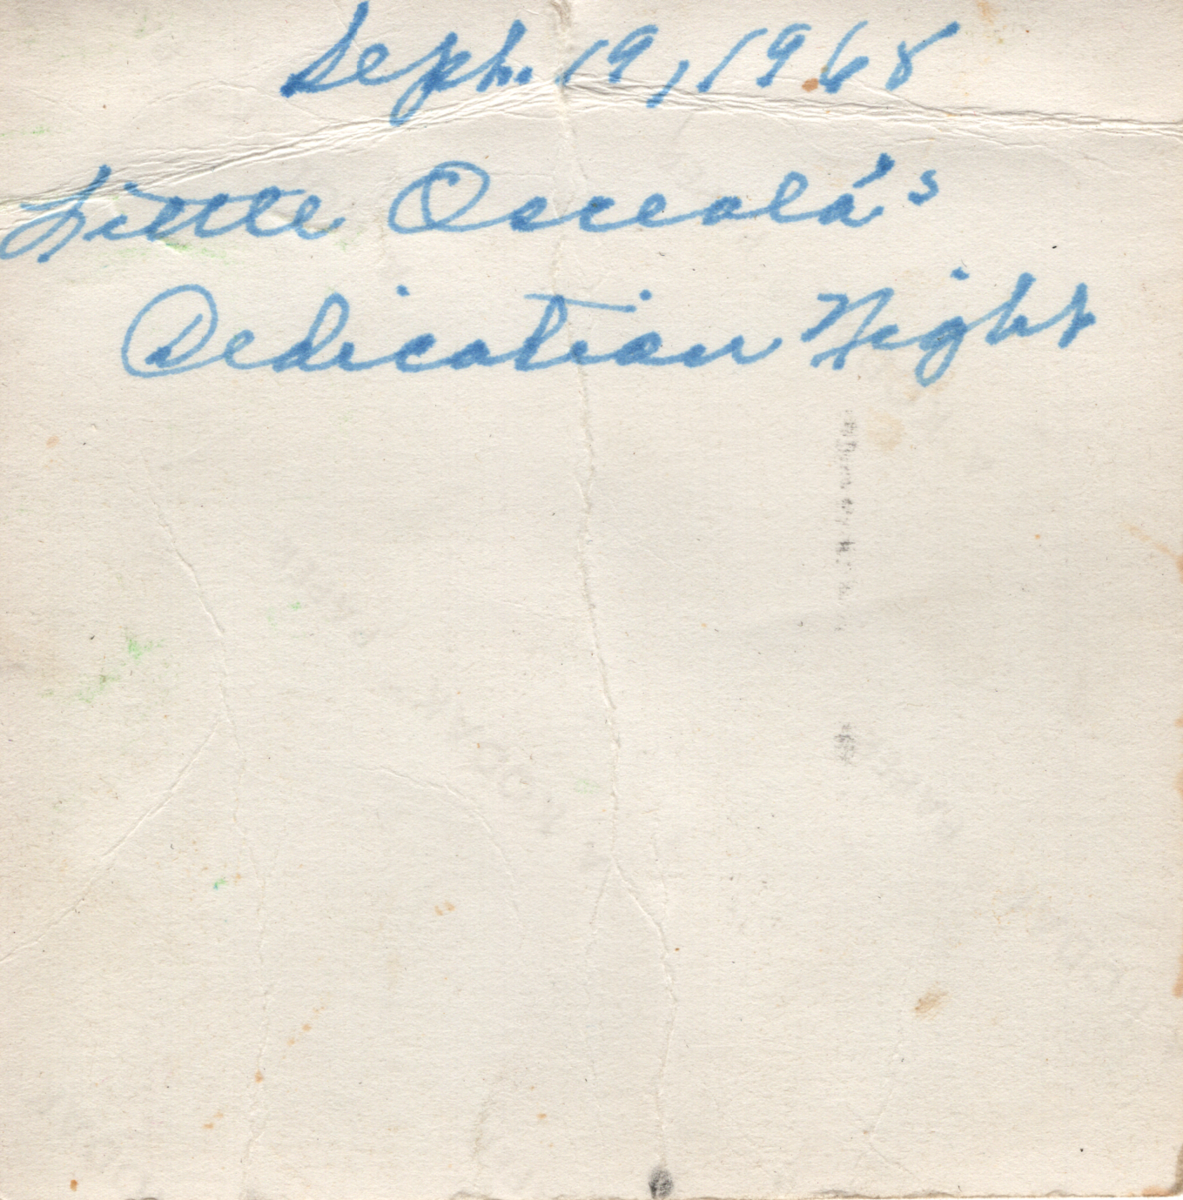 Back of previous photo, written "Sept 19, 1968. Little Osceola's Dedication Night."